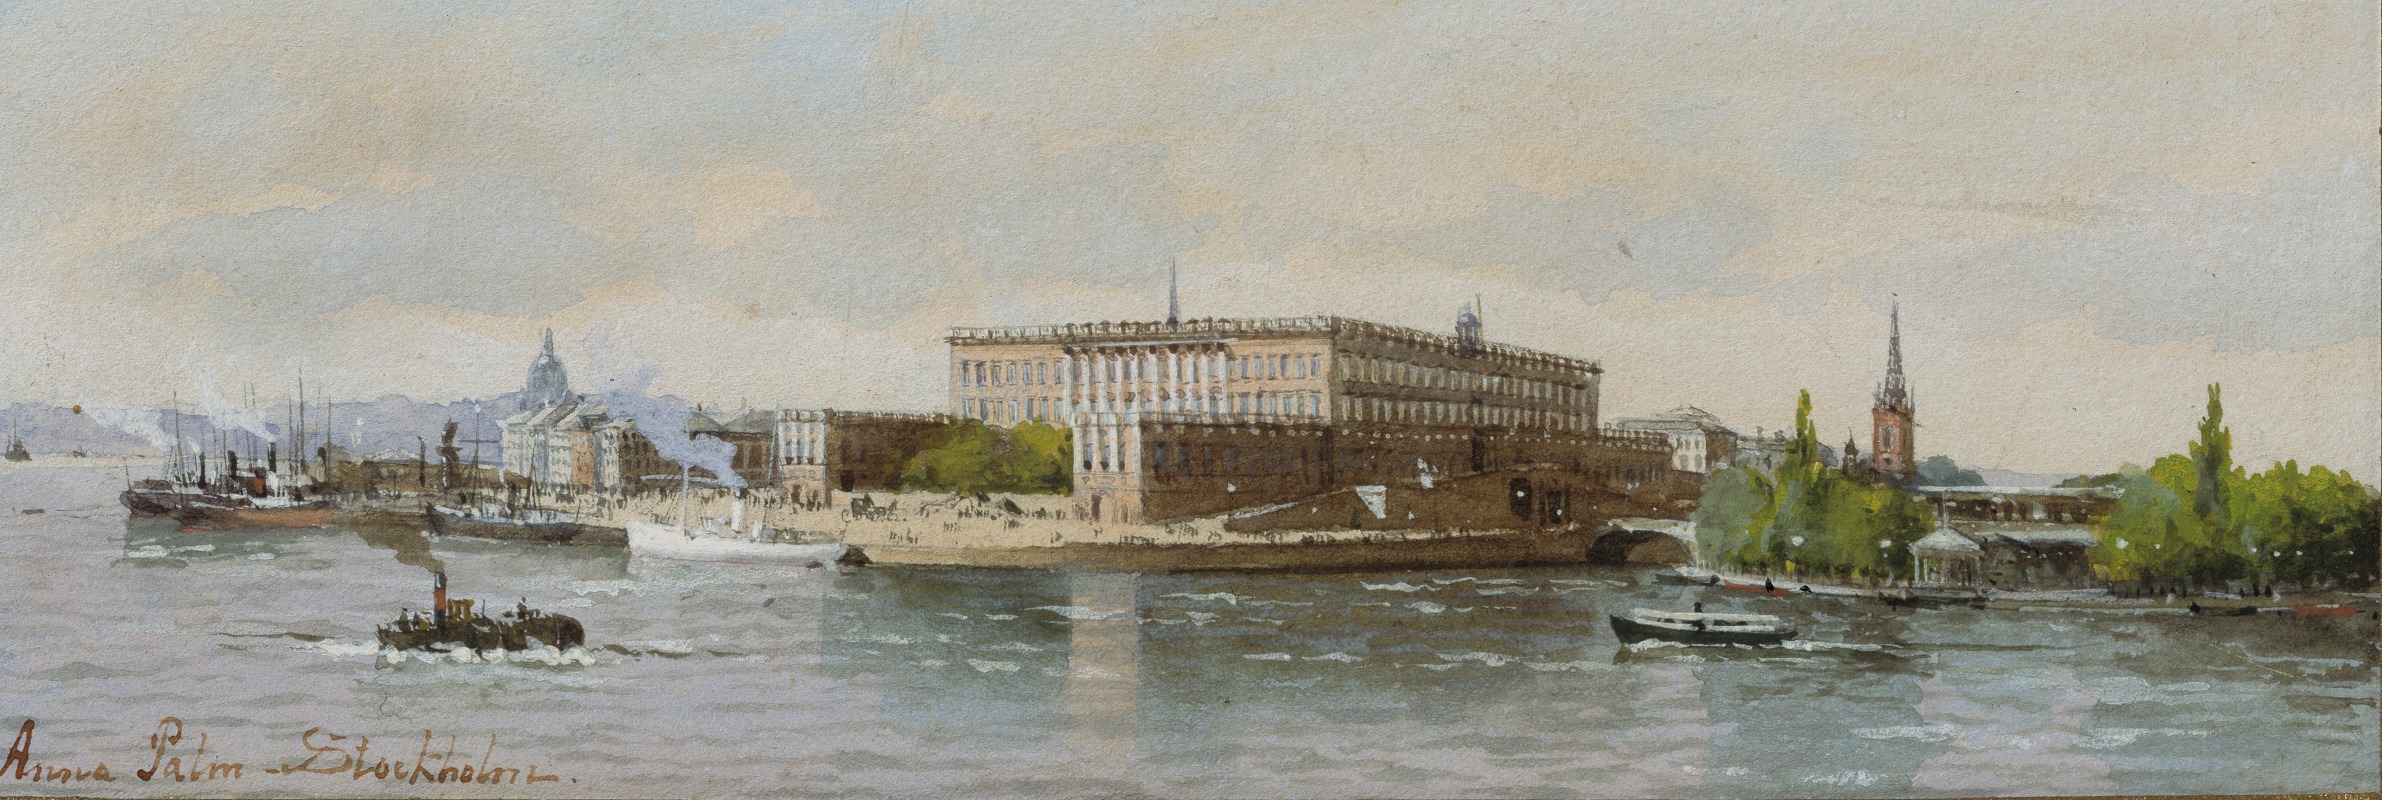 Anna Palm de Rosa - View of the Royal Palace, Stockholm